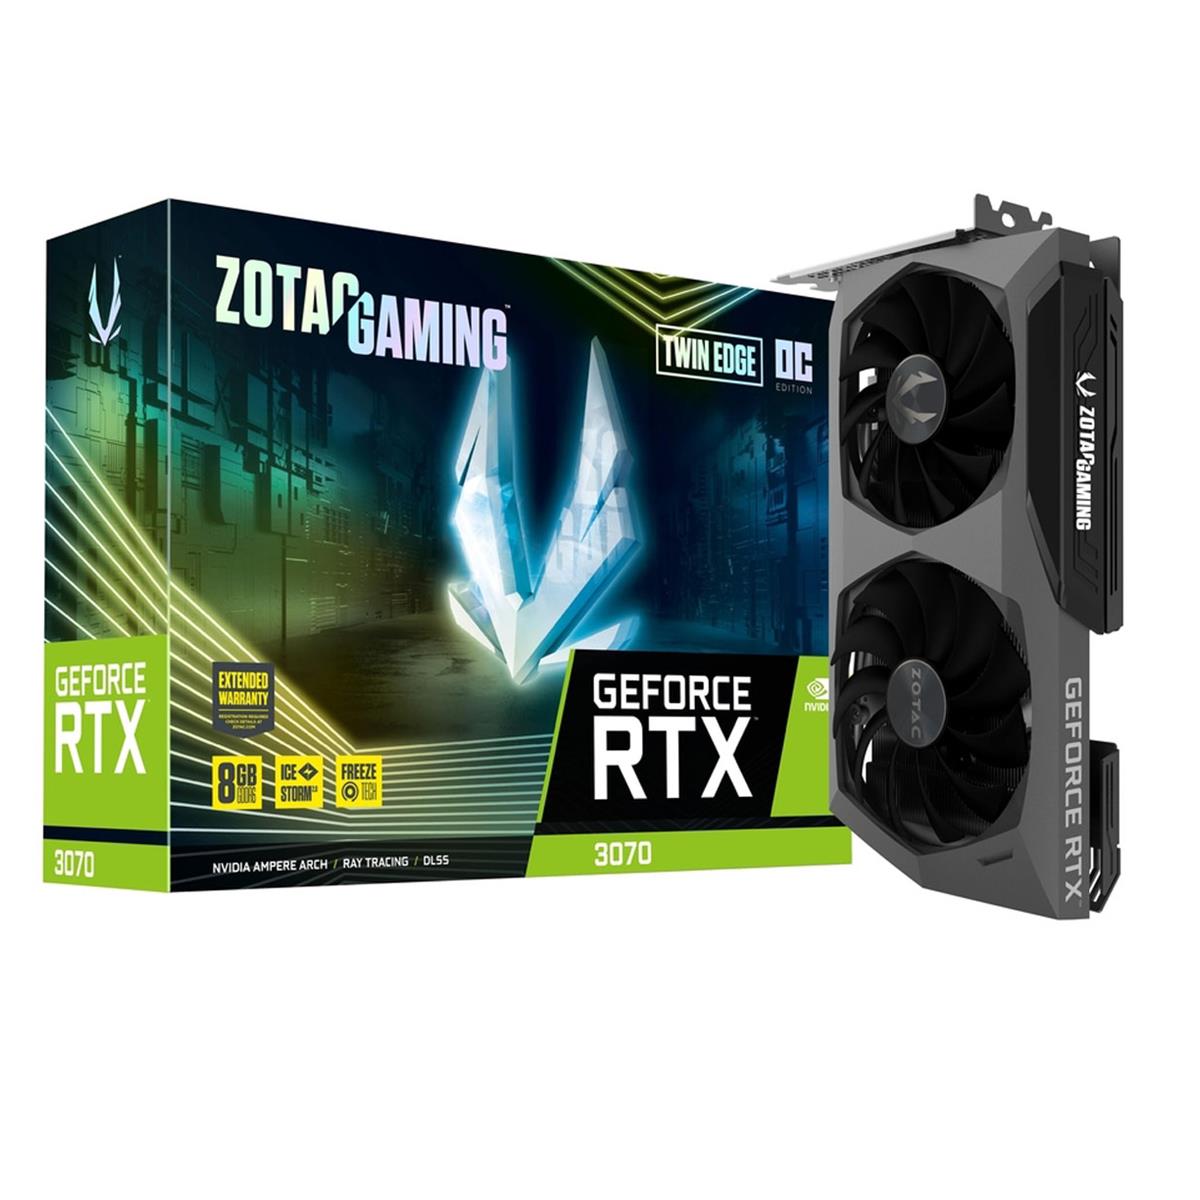 Image of Zotac GAMING GeForce RTX 3070 Twin Edge OC LHR 8GB GDDR6 Graphics Card